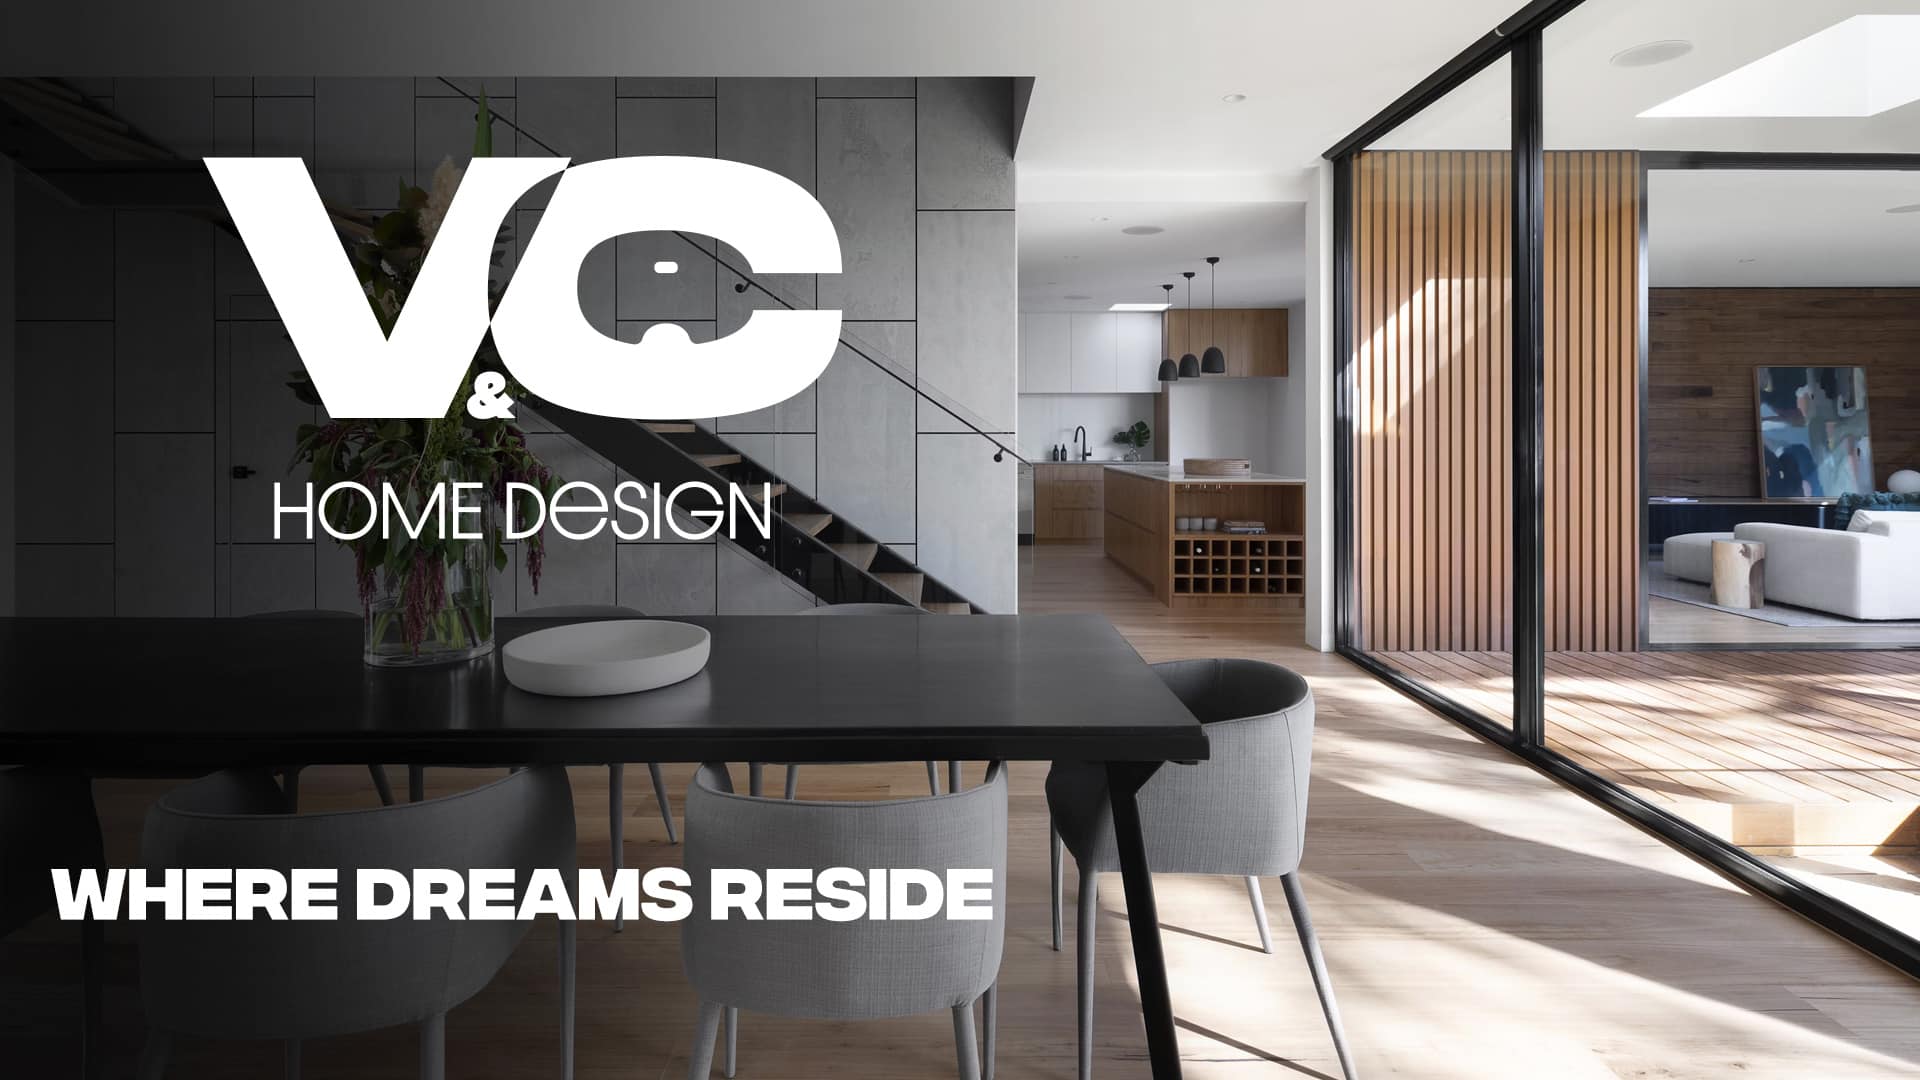 V&C Home Design - Tagline